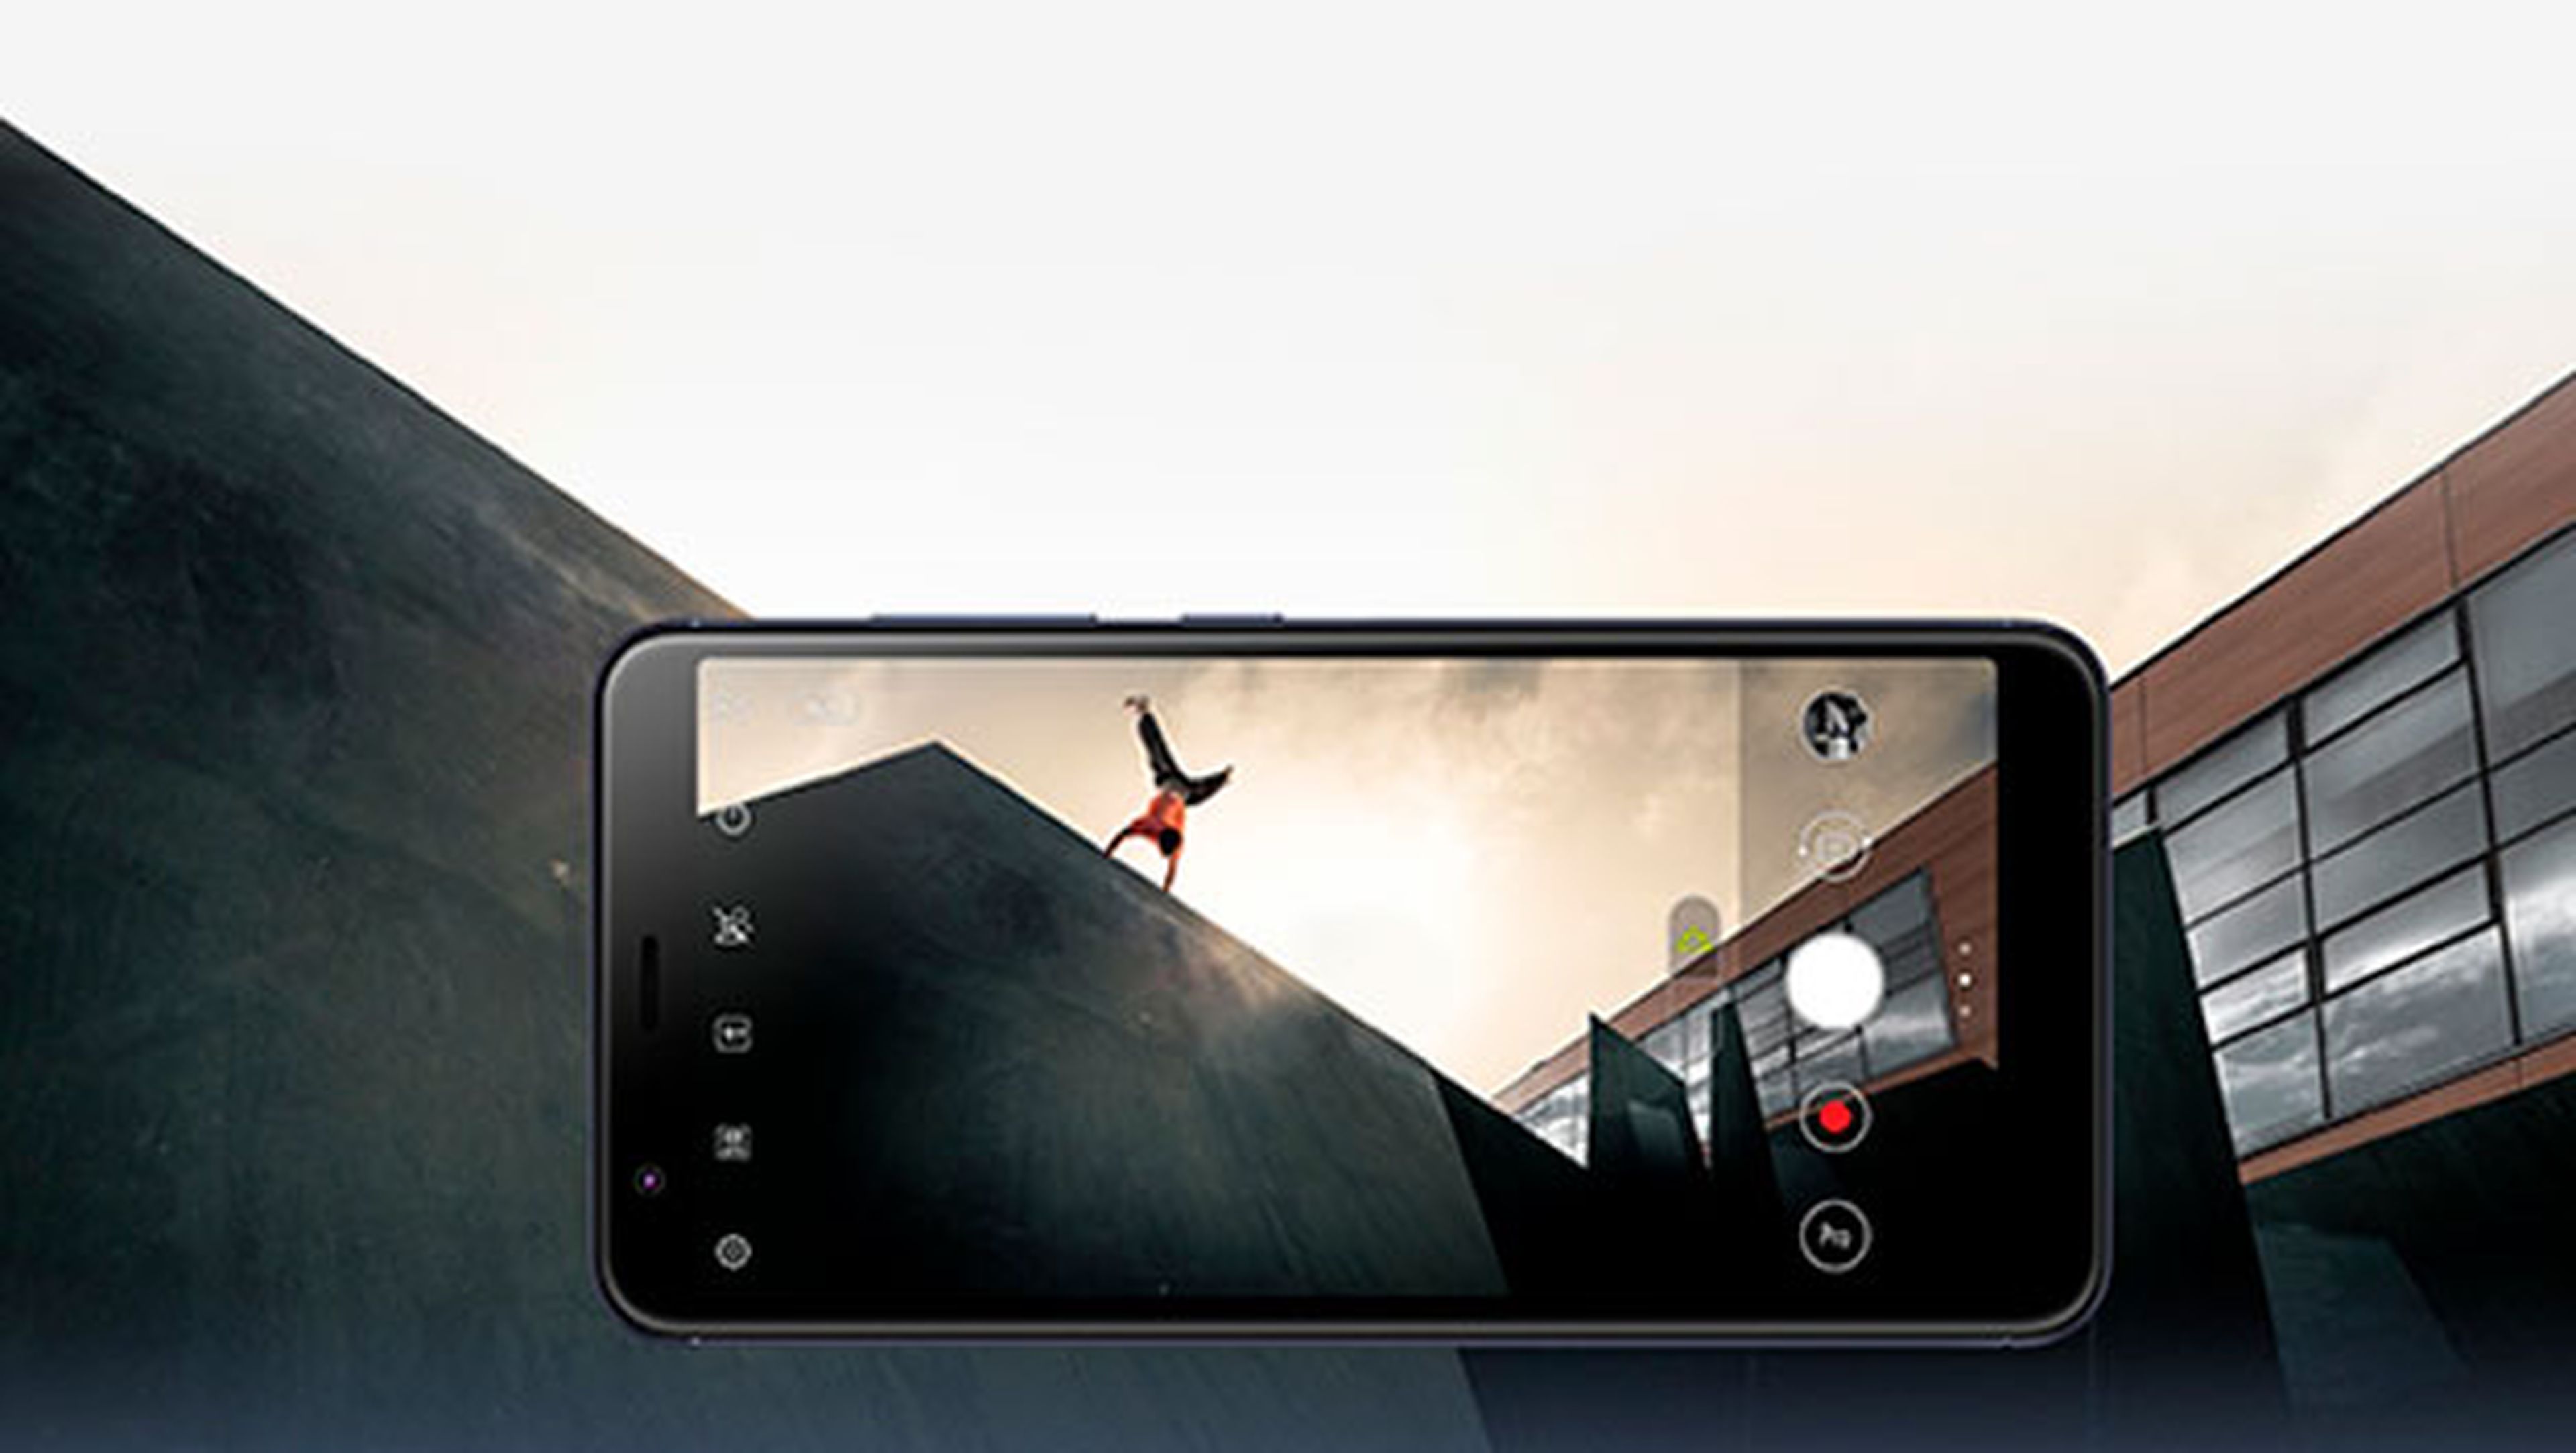 Zenfone Max Plus incluye una lente gran angular